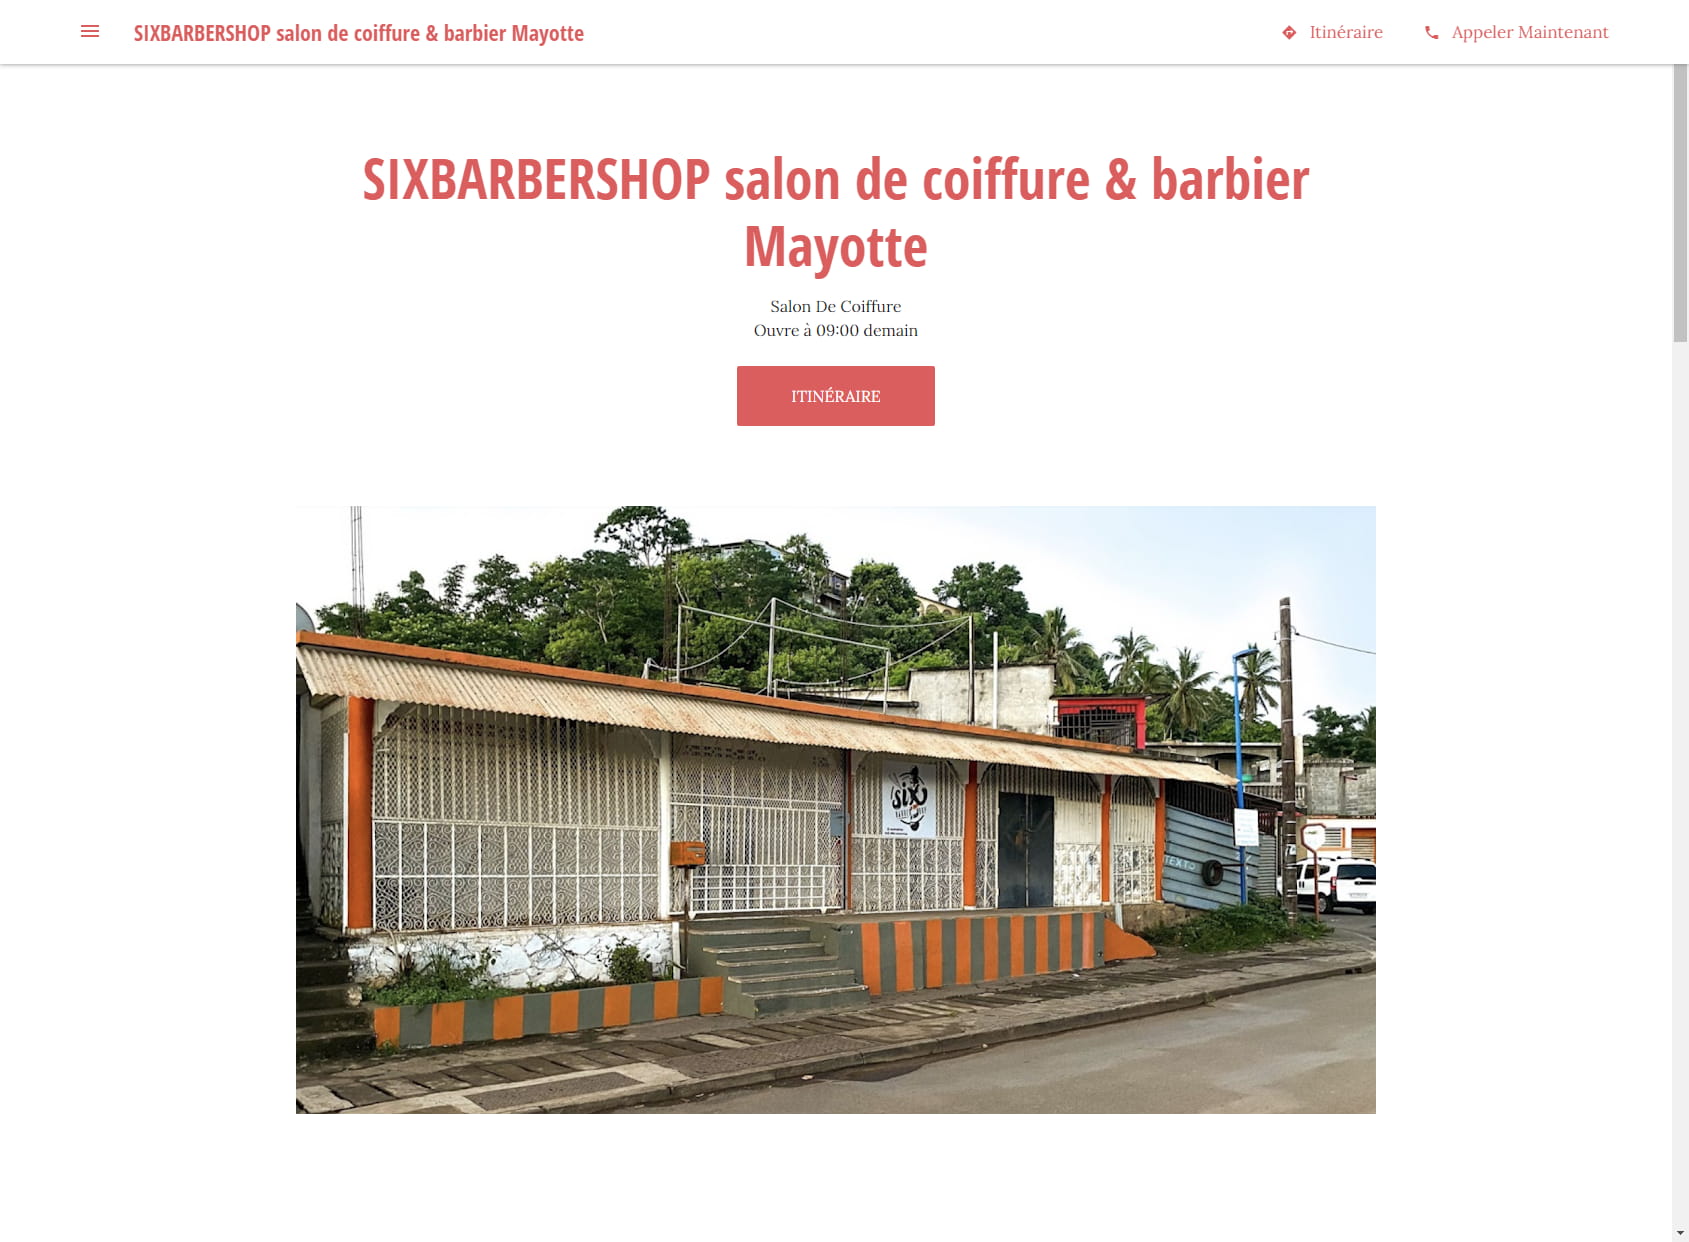 SIXBARBERSHOP salon de coiffure & barbier Mayotte